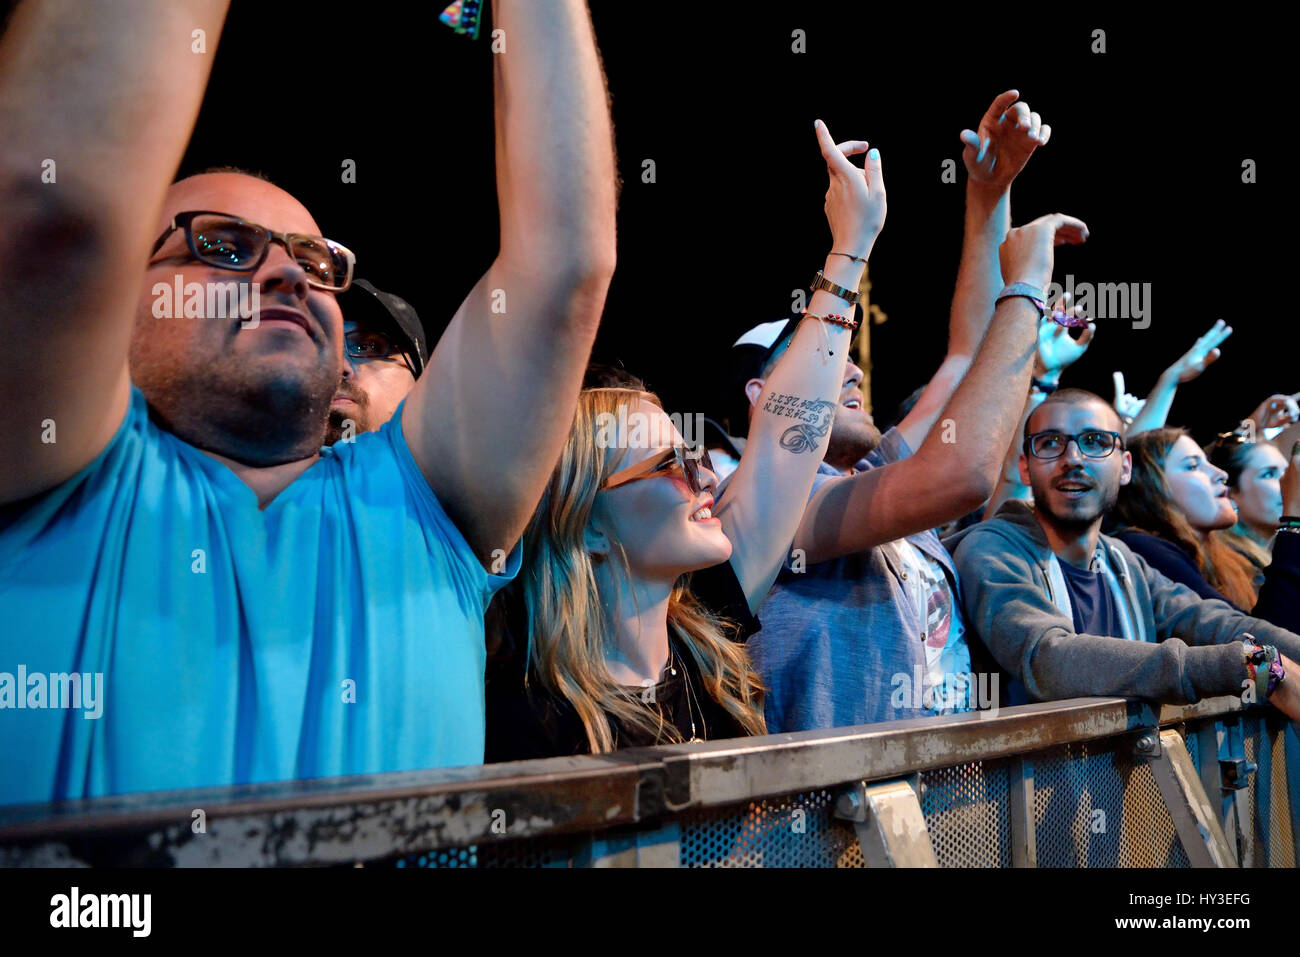 BARCELONA - JUN 4: Crowd in a concert at Primavera Sound 2016 Festival on June 4, 2016 in Barcelona, Spain. Stock Photo